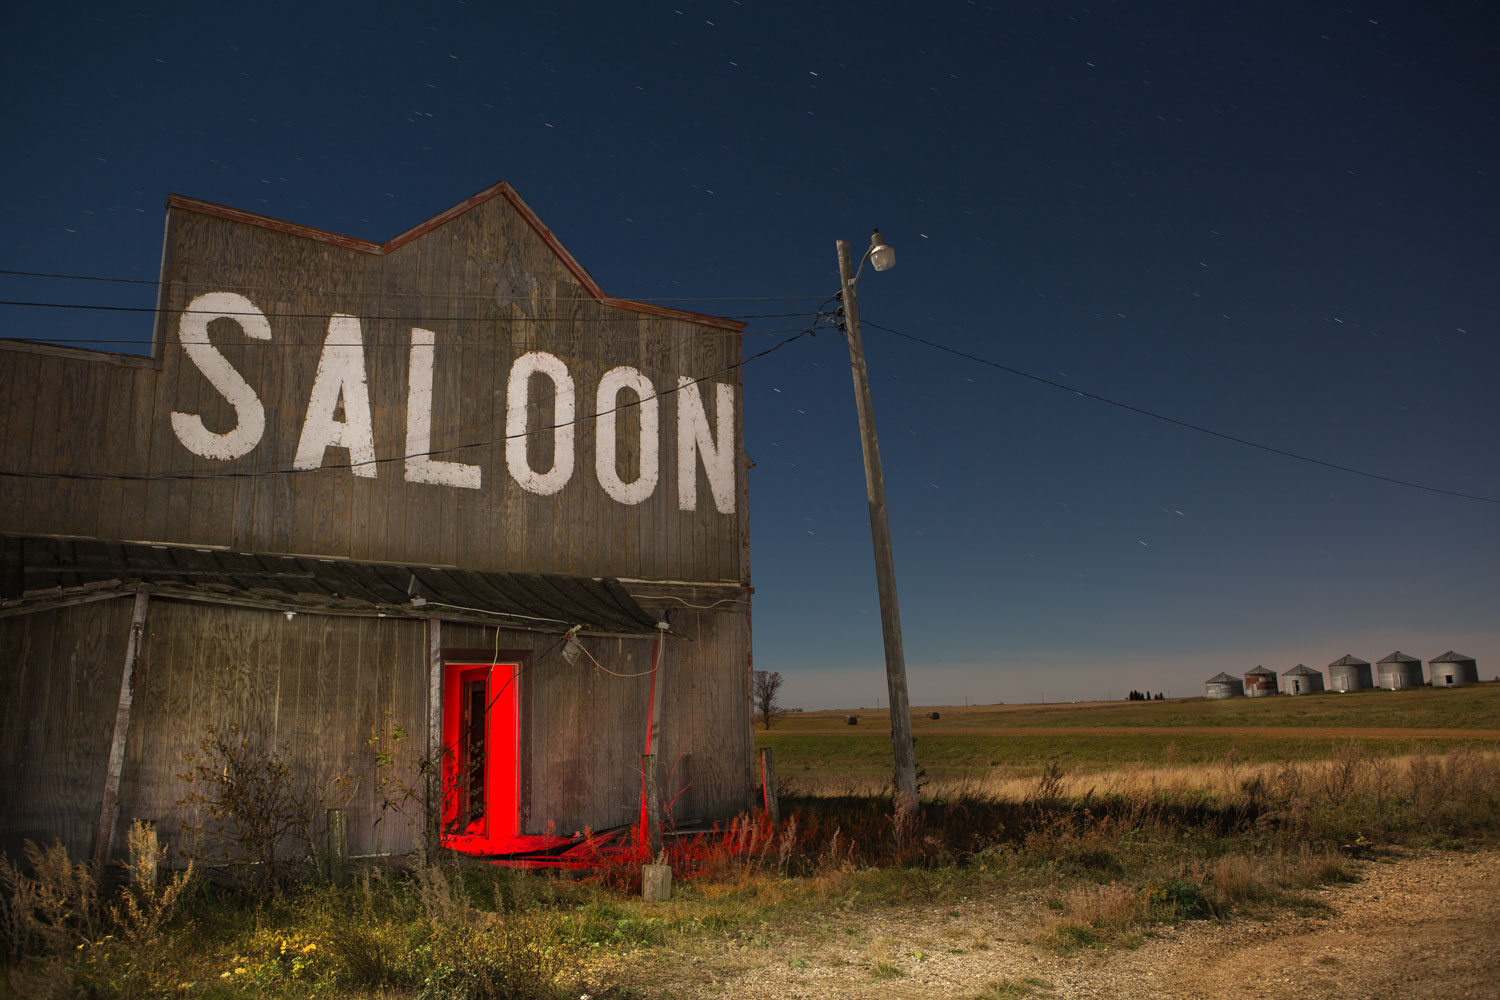 Saloon - Wabek, North Dakota - The Flash Nites